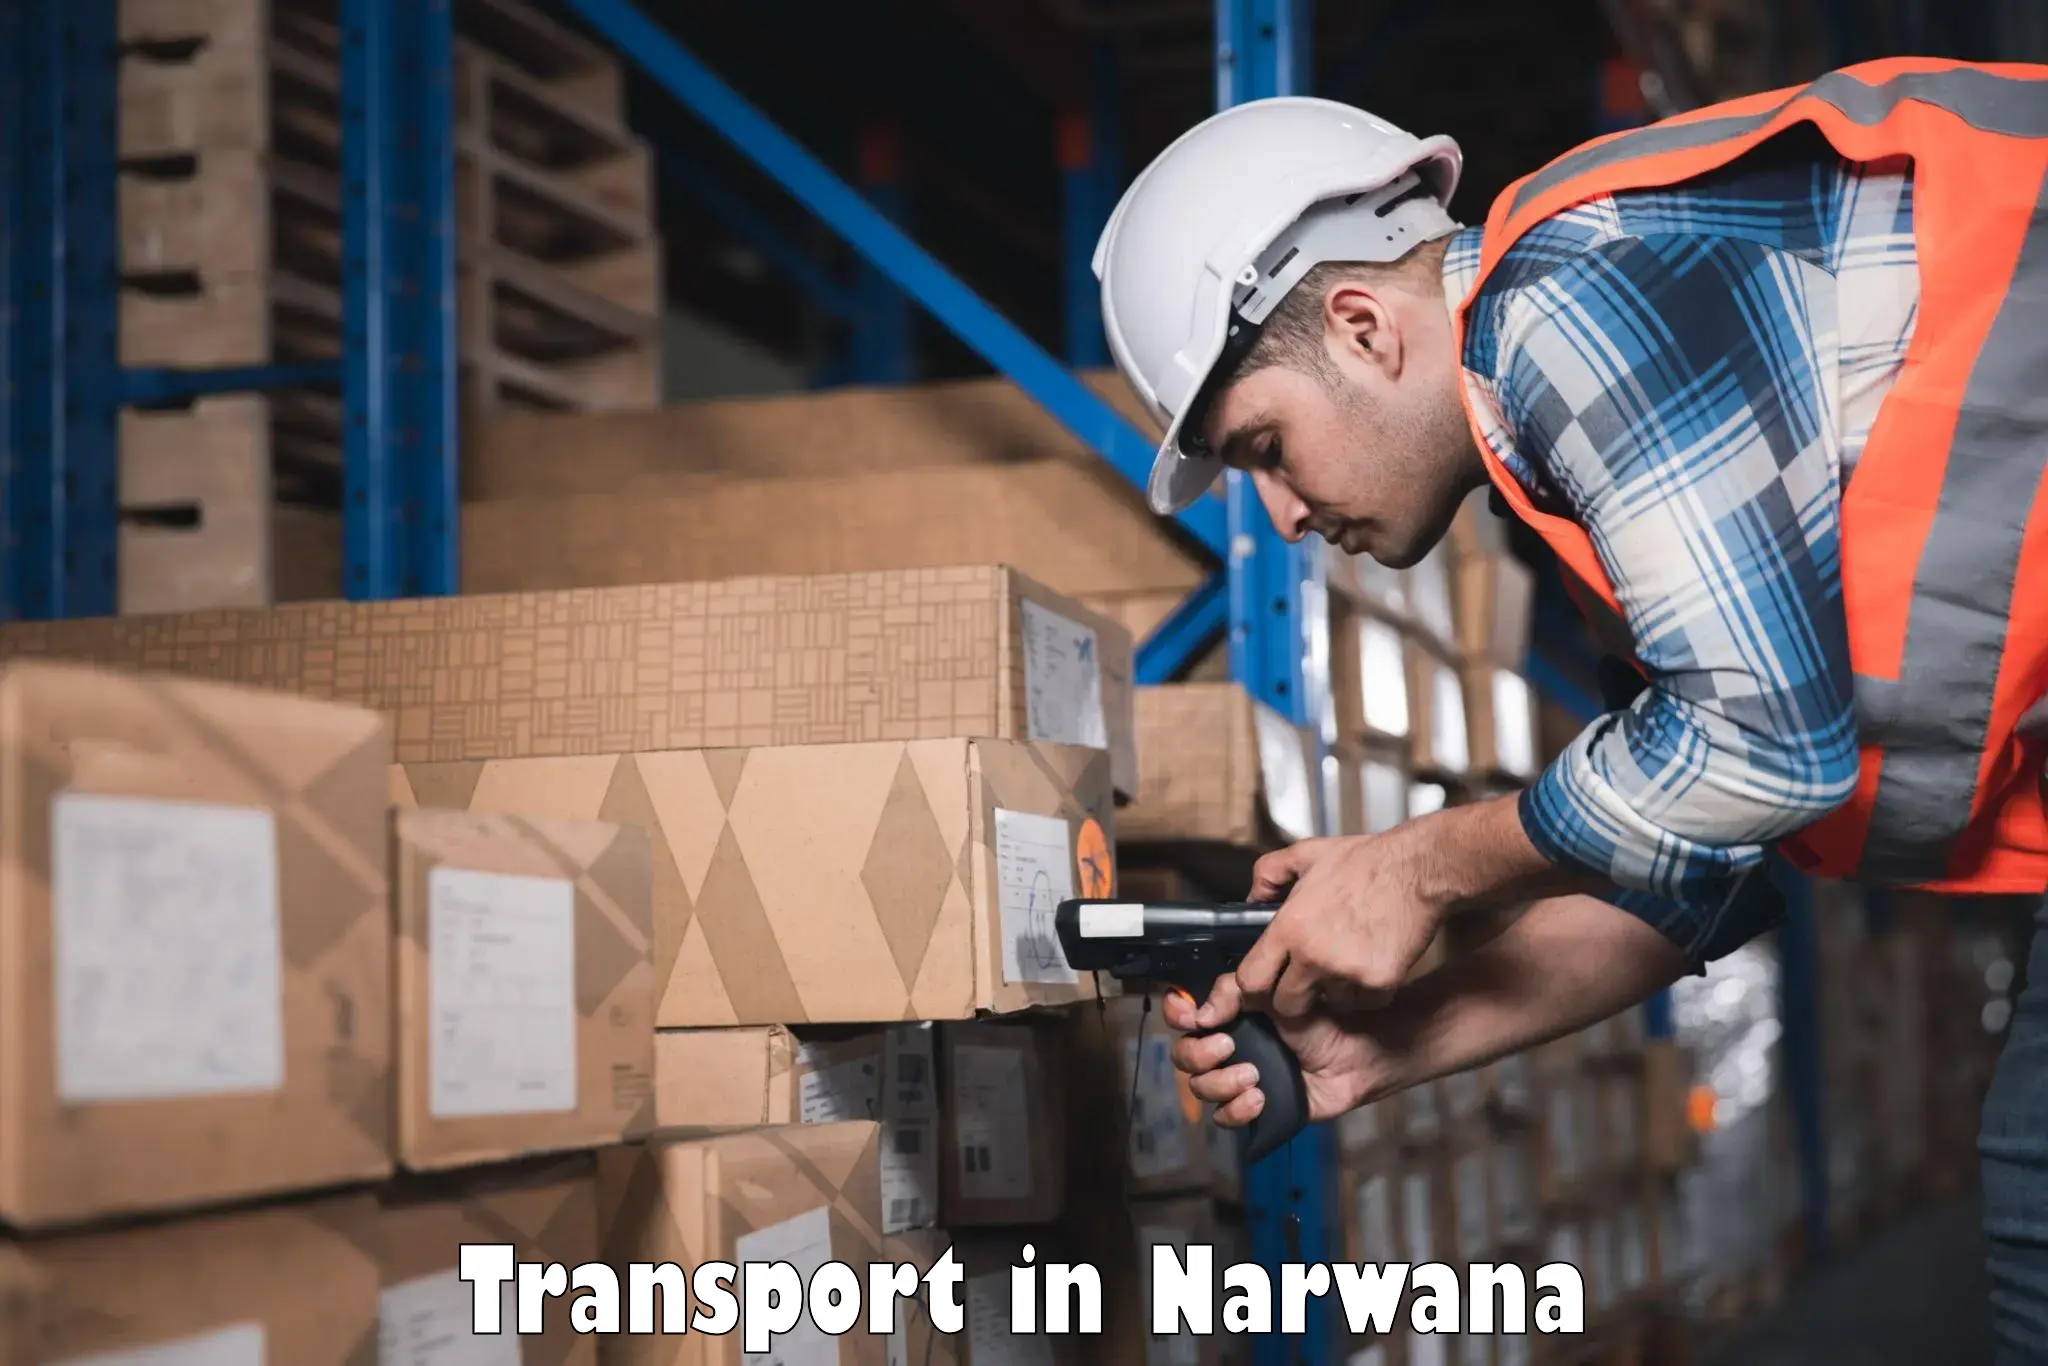 Online transport in Narwana